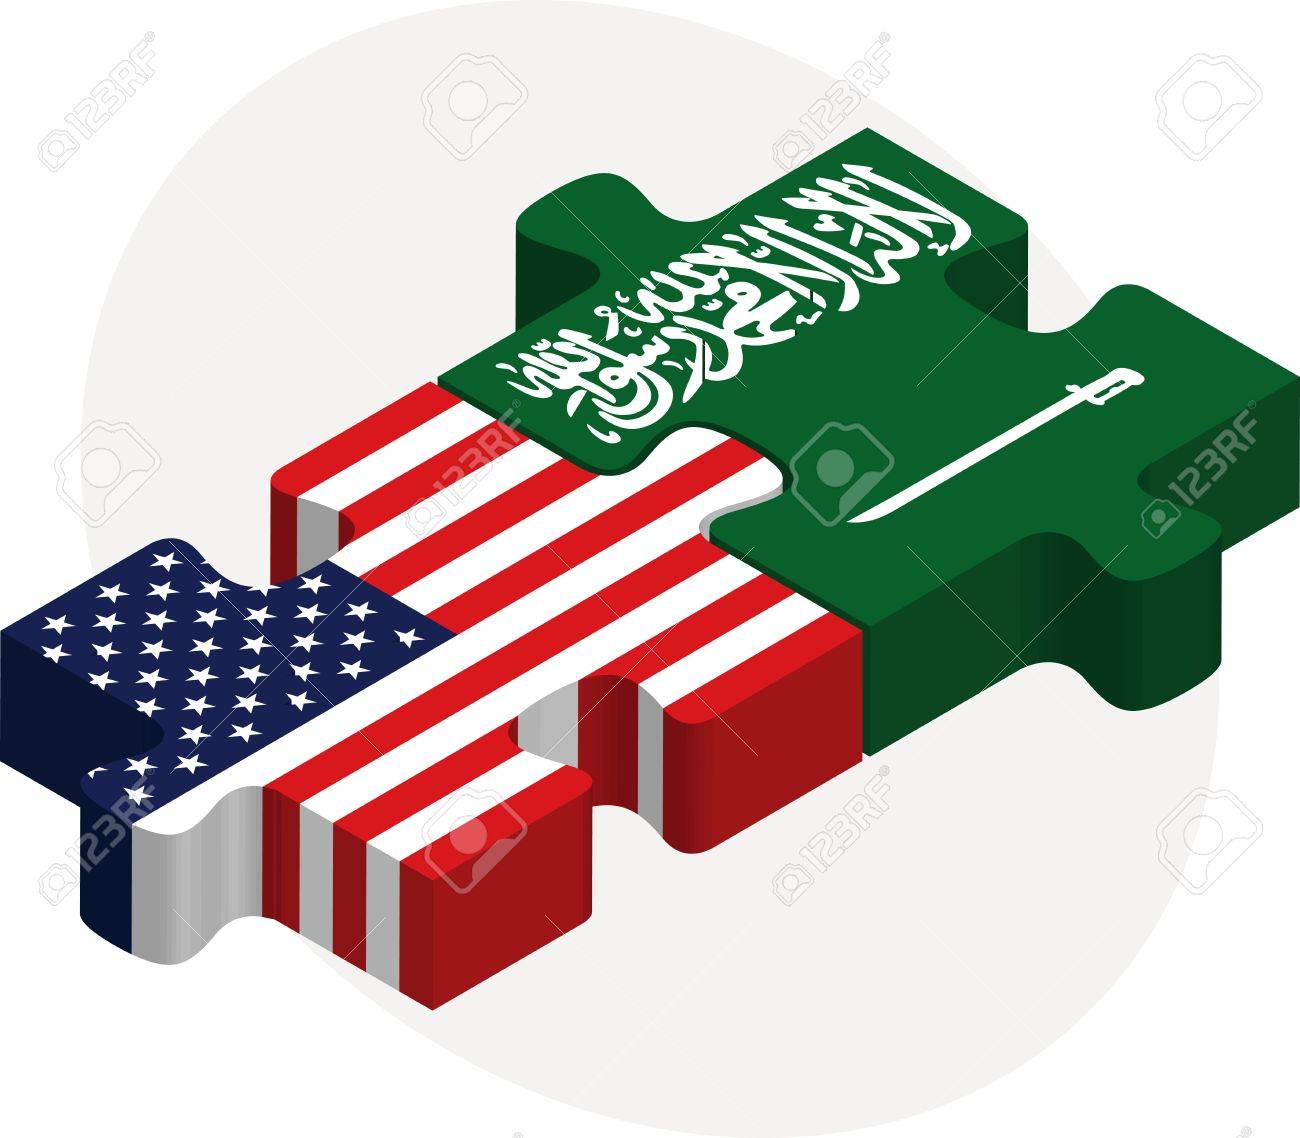 Saudi Arabija 29208619-illustration-of-USA-and-Saudi-Arabia-Flags-in-puzzle-isolated-on-white-background-Stock-Vector